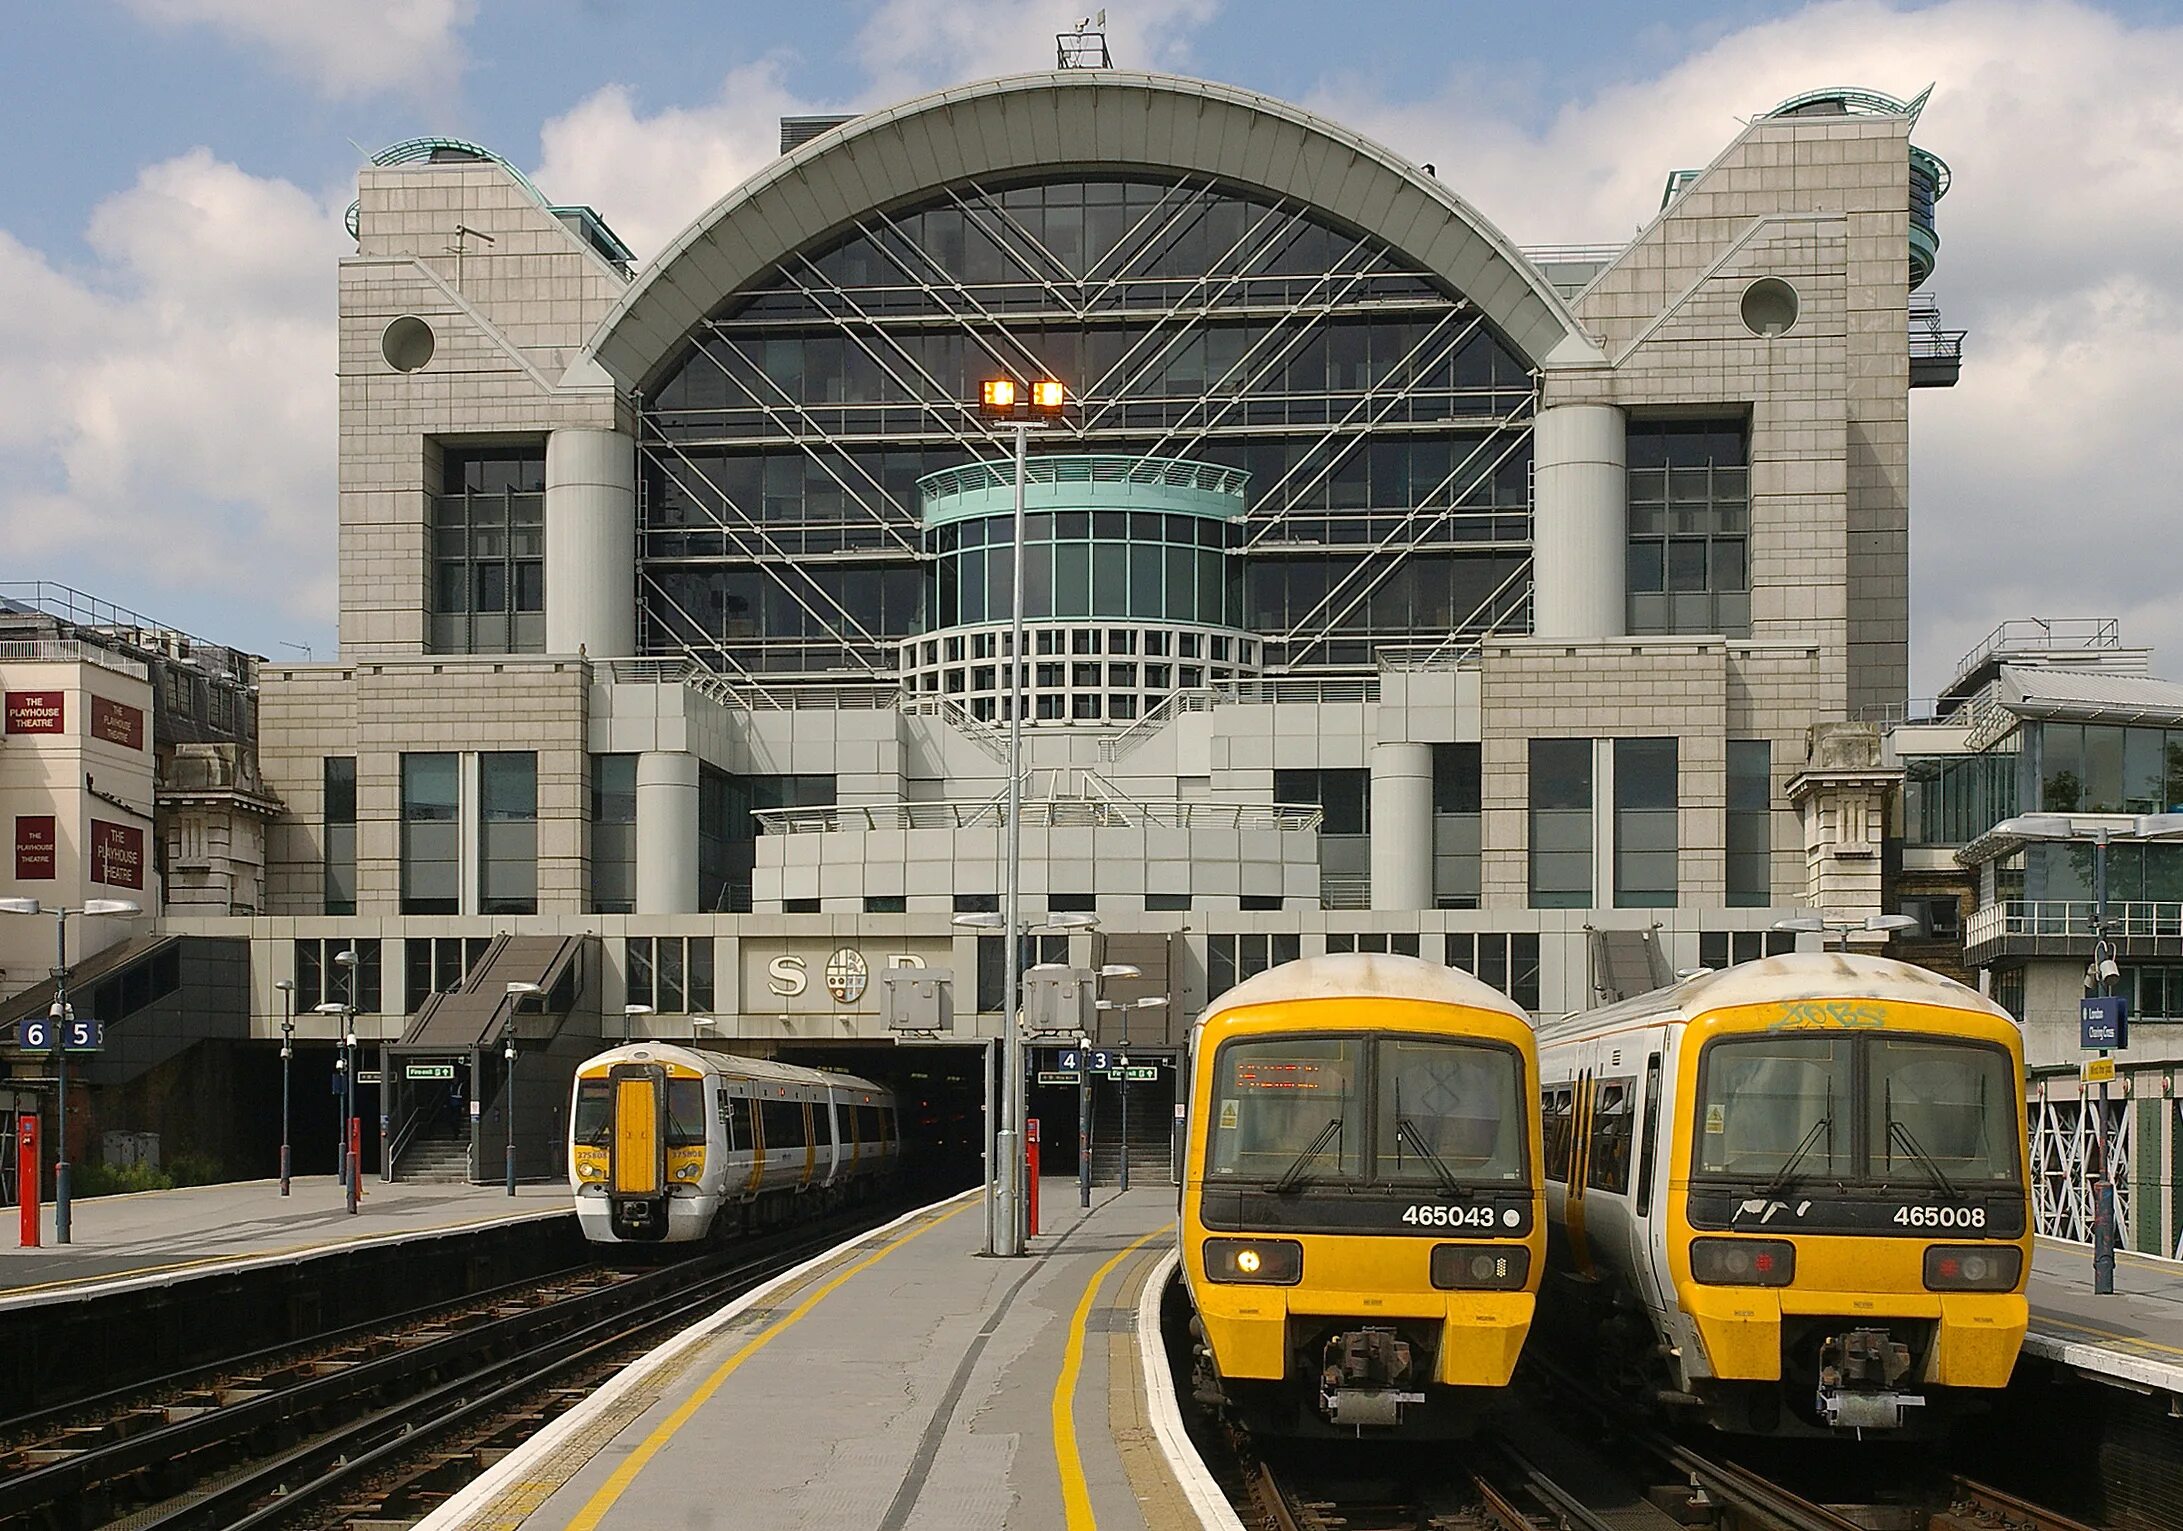 Вокзал Чаринг кросс. Вокзал Чаринг кросс в Лондоне. Железнодорожный вокзал Чаринг - кросс-. Чаринг-кросс (станция метро).